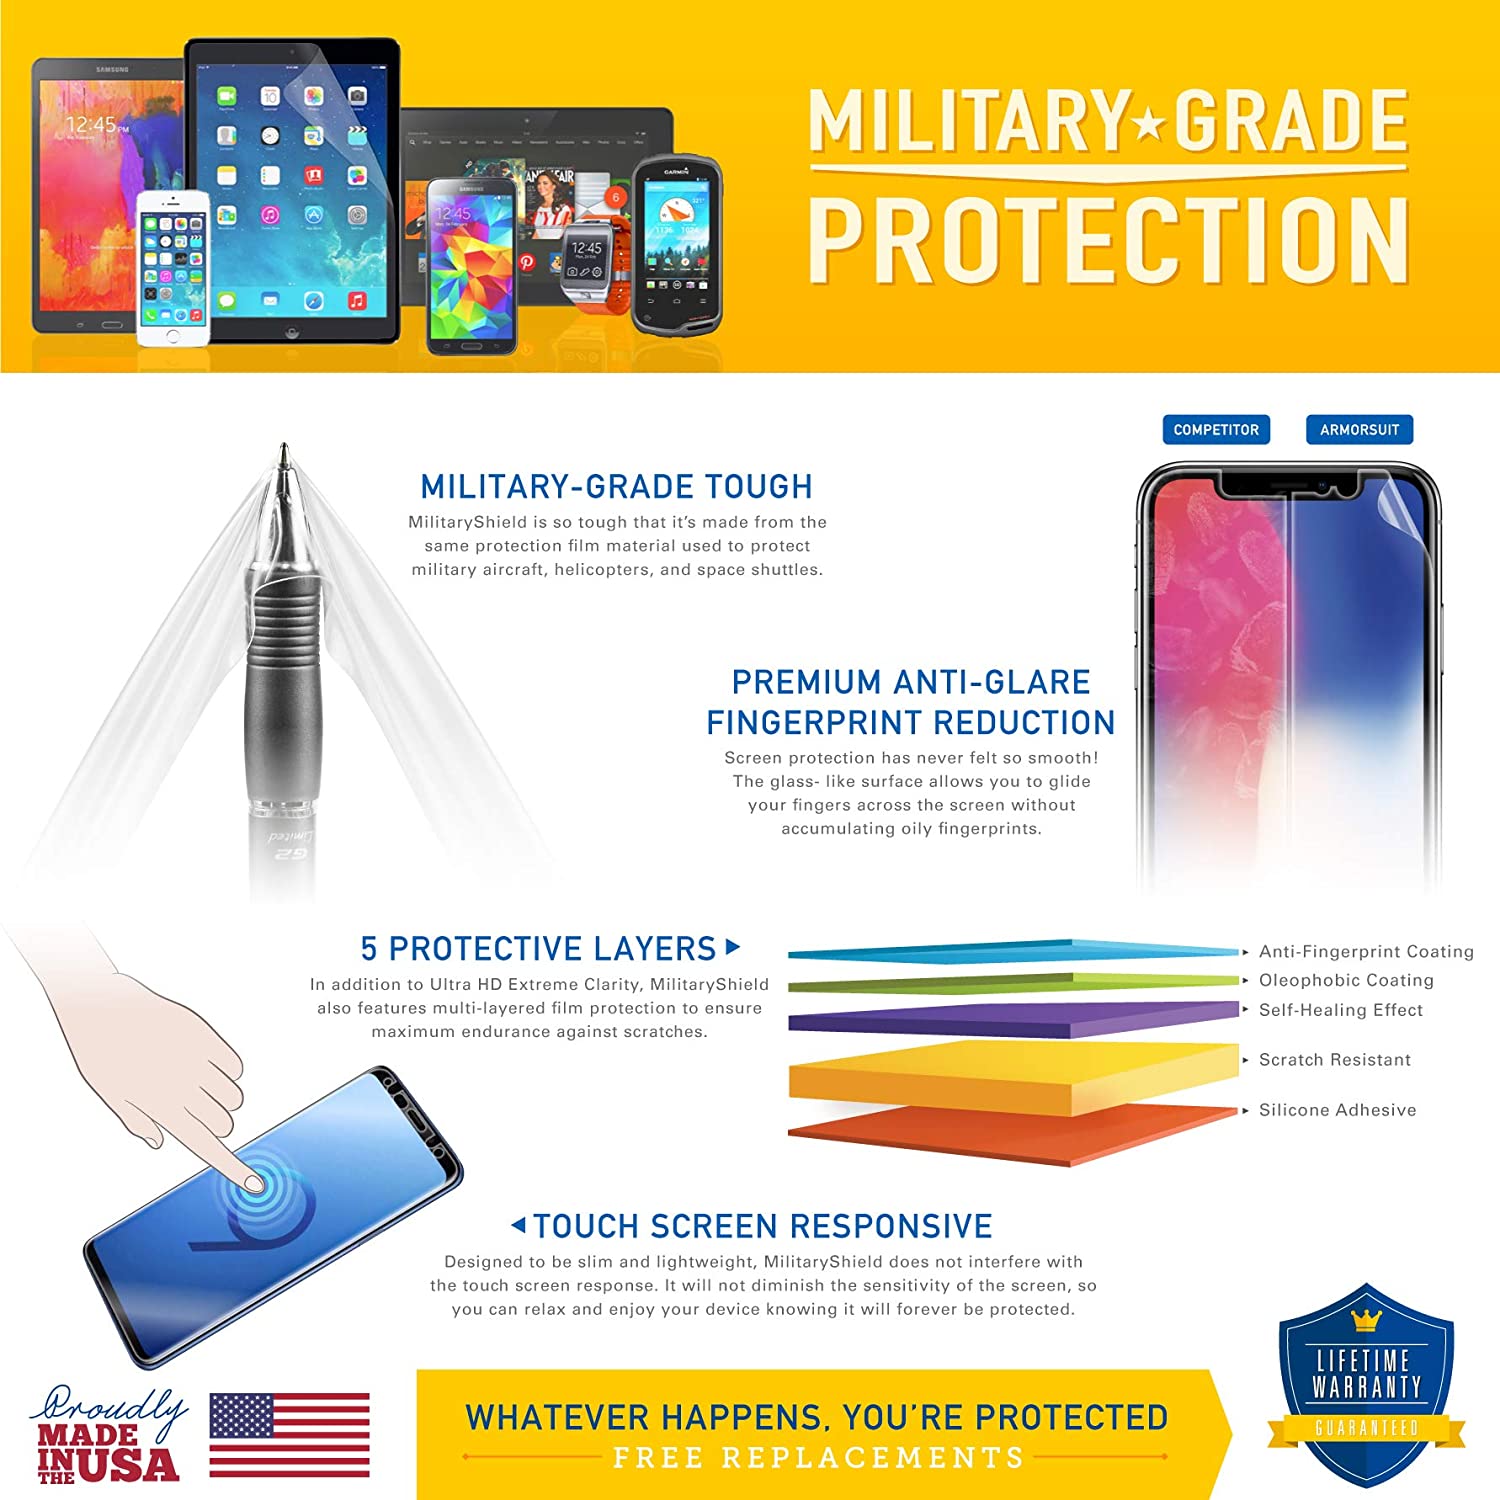 Samsung Galaxy S7 Screen Protector + Carbon Fiber Film Protector